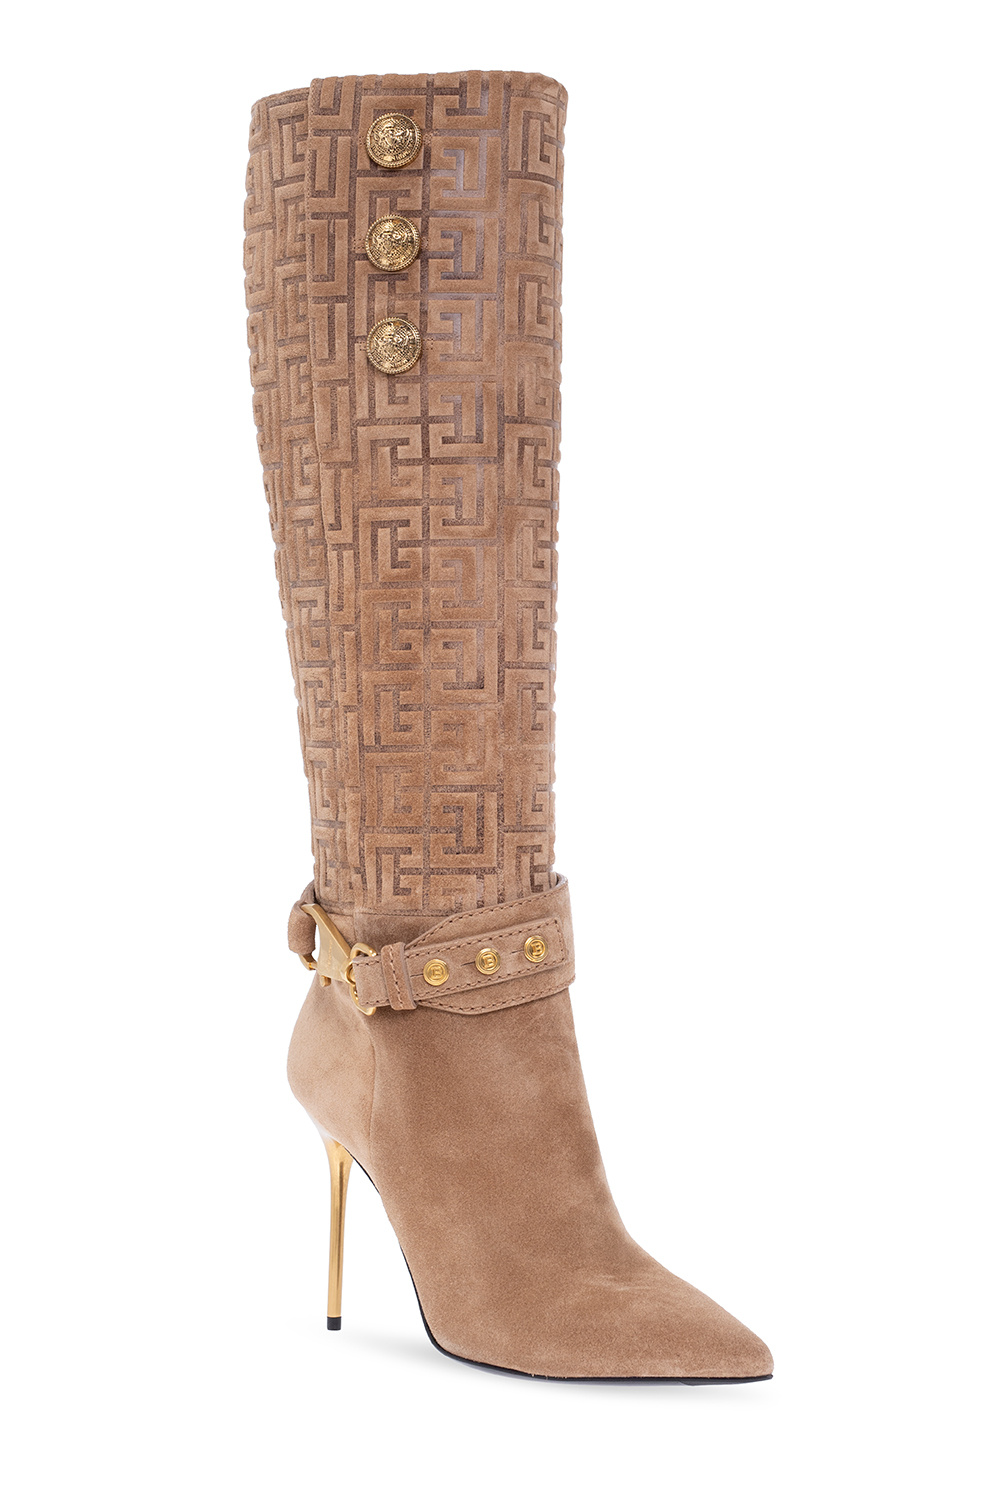 Balmain ‘Robin’ heeled boots